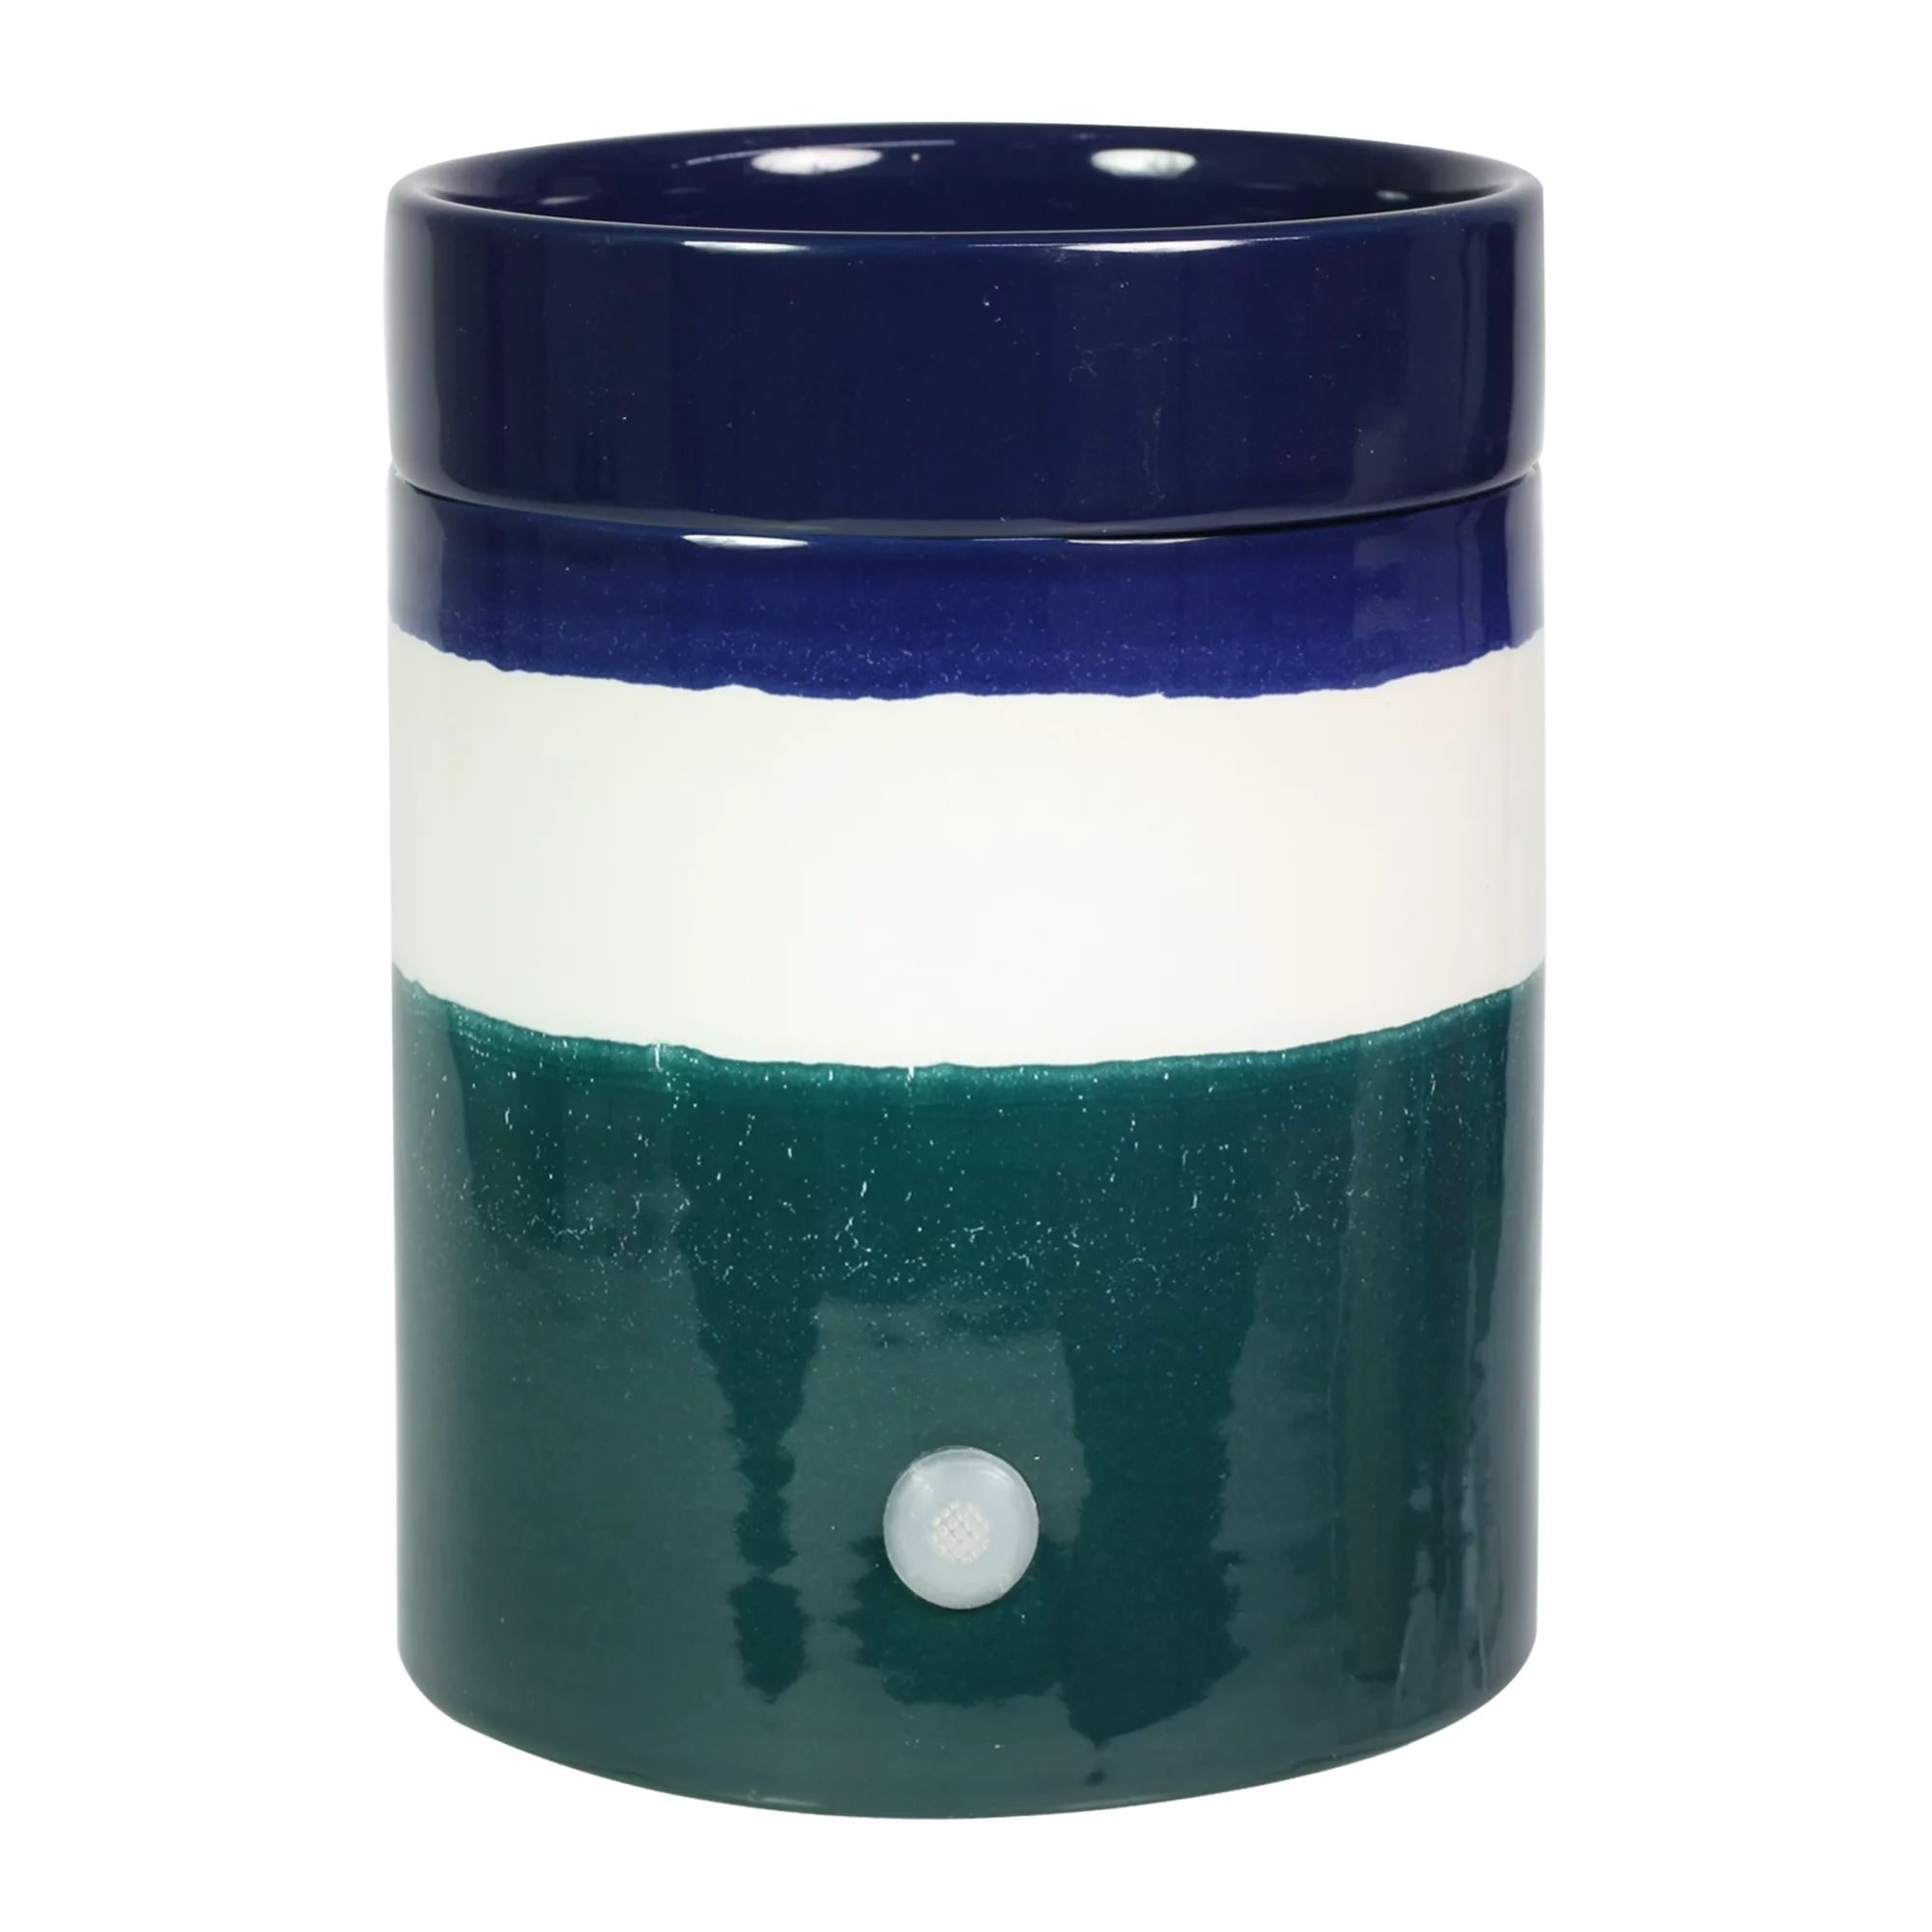 Mainstays Electric Blue Teal Ceramic Wax Warmer, Single Pack | Walmart (US)